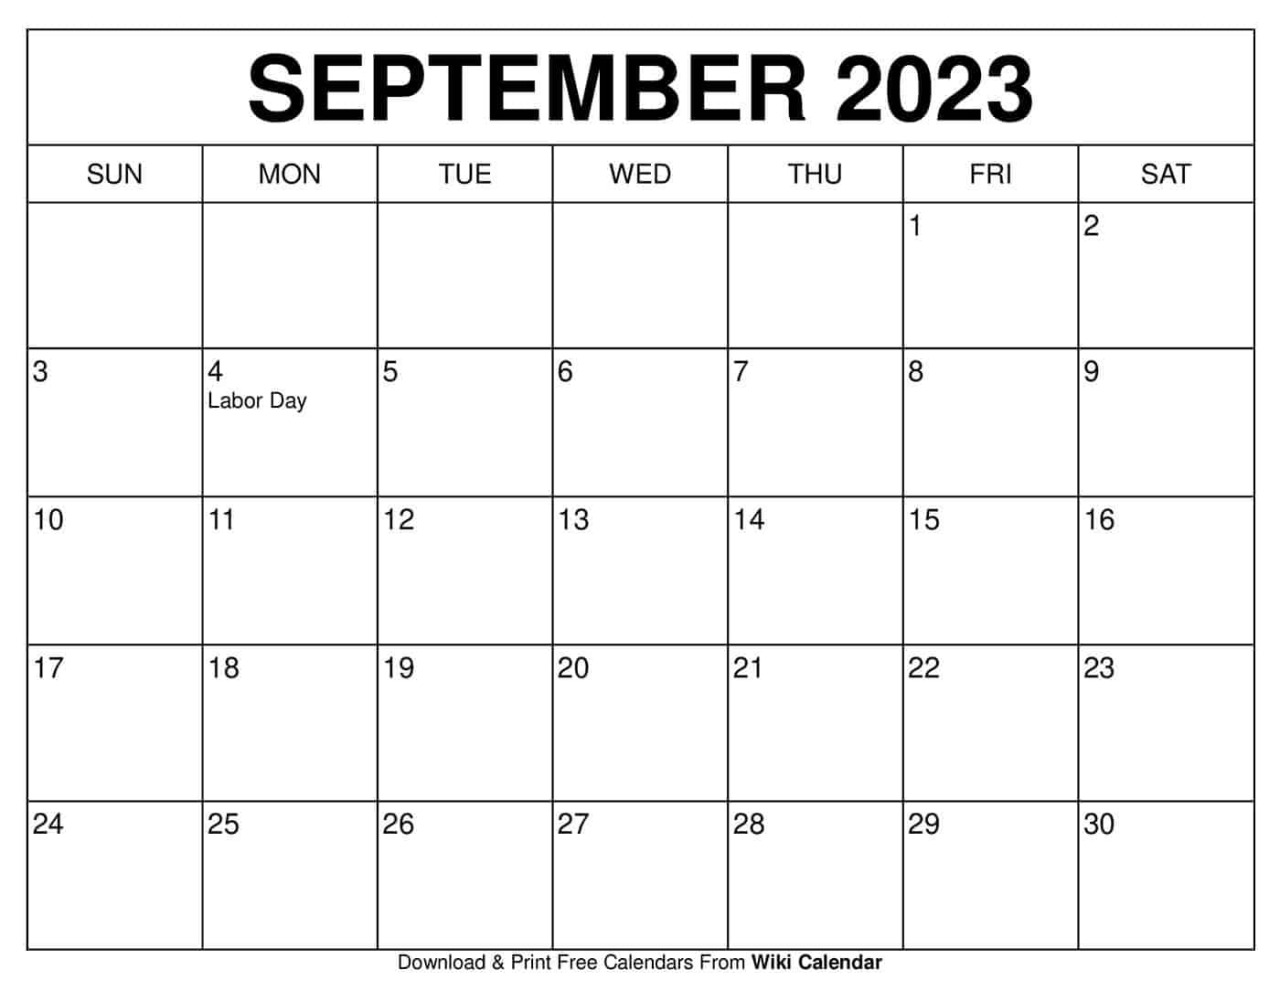 wiki-calendar-free-printable-september-2023-calendar-templates